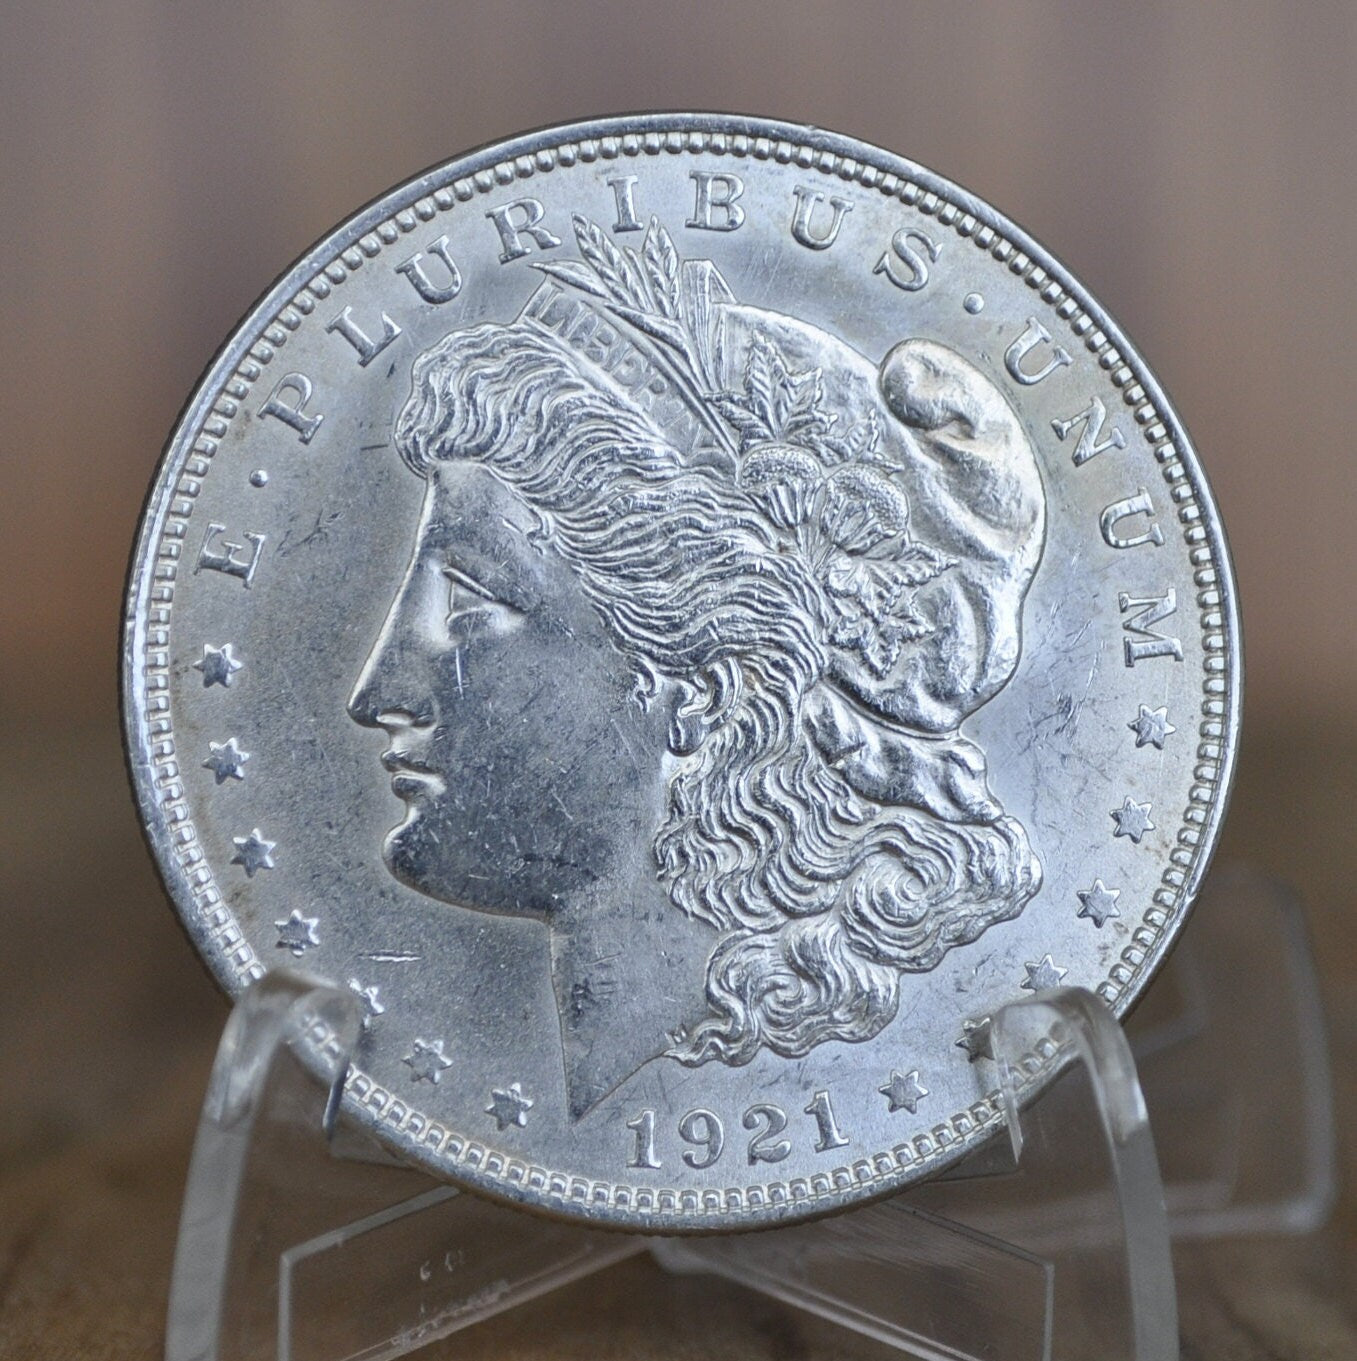 1921 Morgan Dollar - Choose by Grade AU-MS60/BU (Uncirculated) - Philadelphia Mint - 1921P Morgan Silver Dollar - 1921-P Silver Dollar